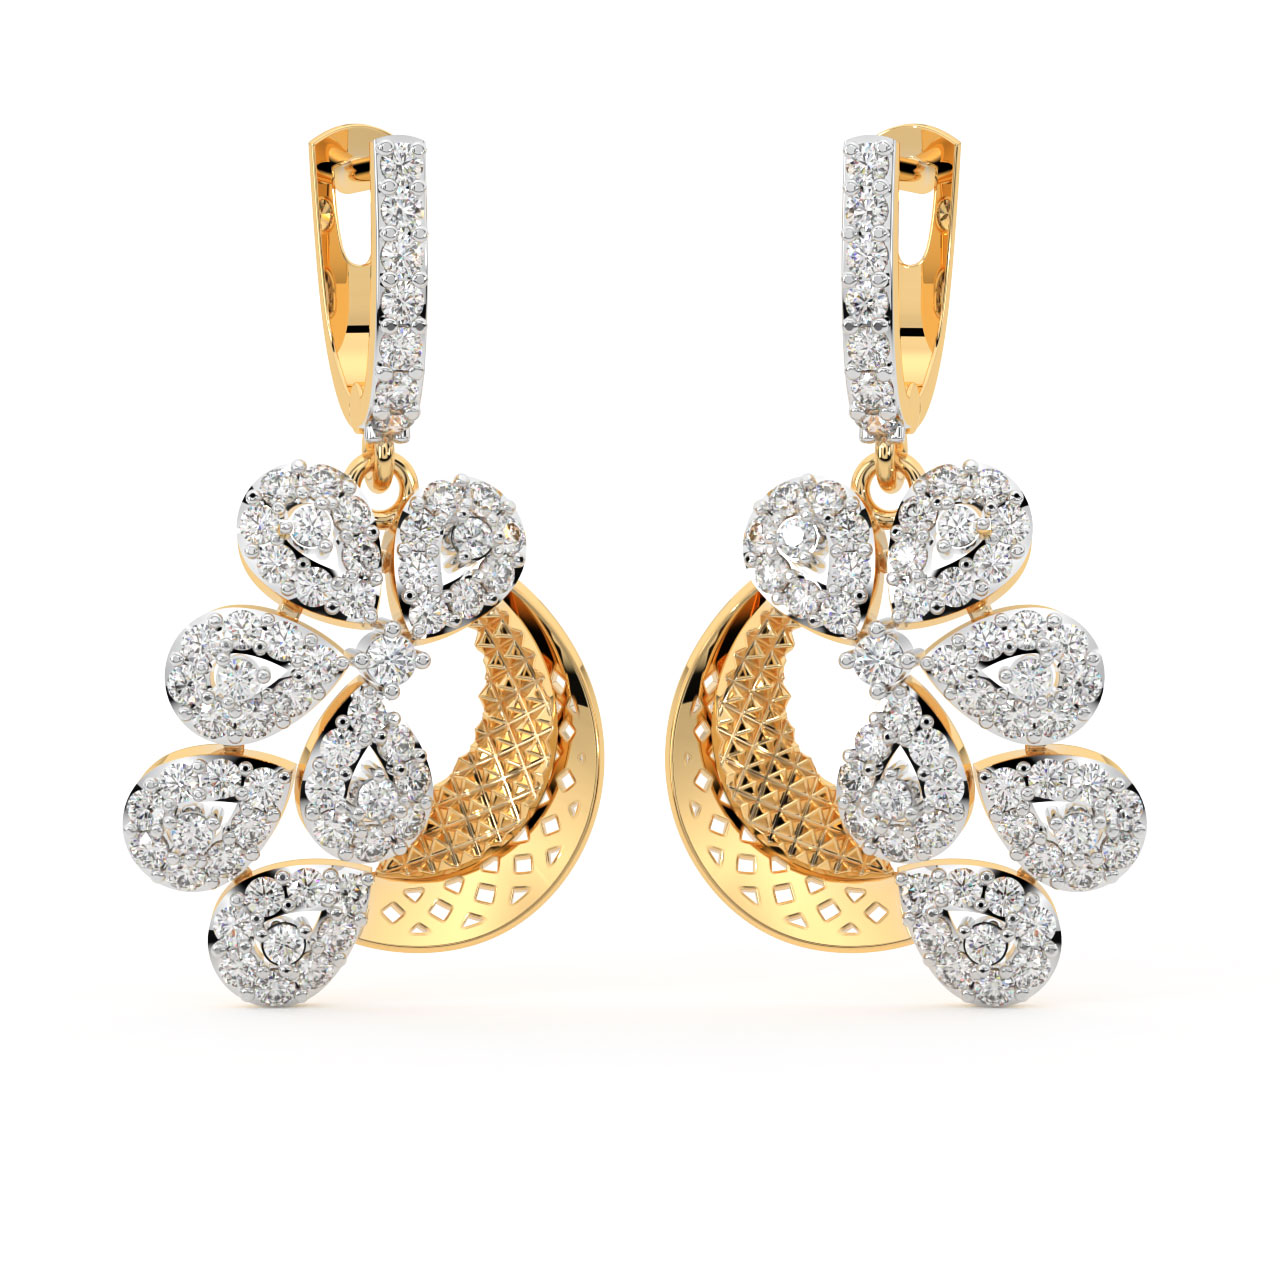 Lucia Round Diamond Earrings